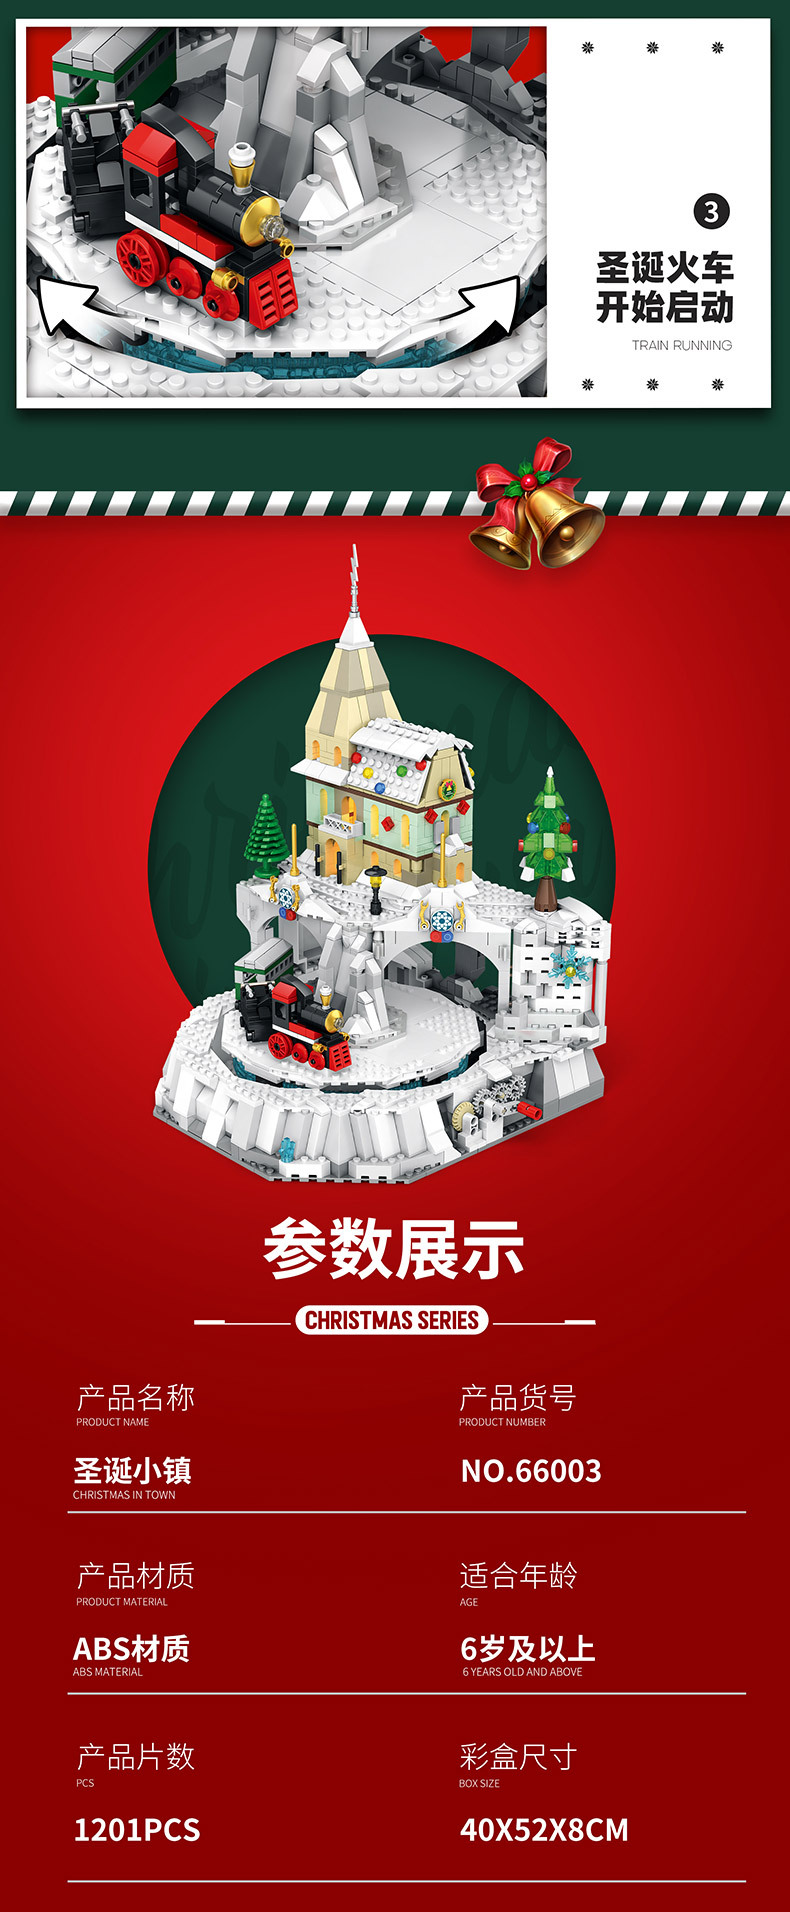 Reobrix 66003 Merry Christmas Series Christmas Town Building Block Toy Set